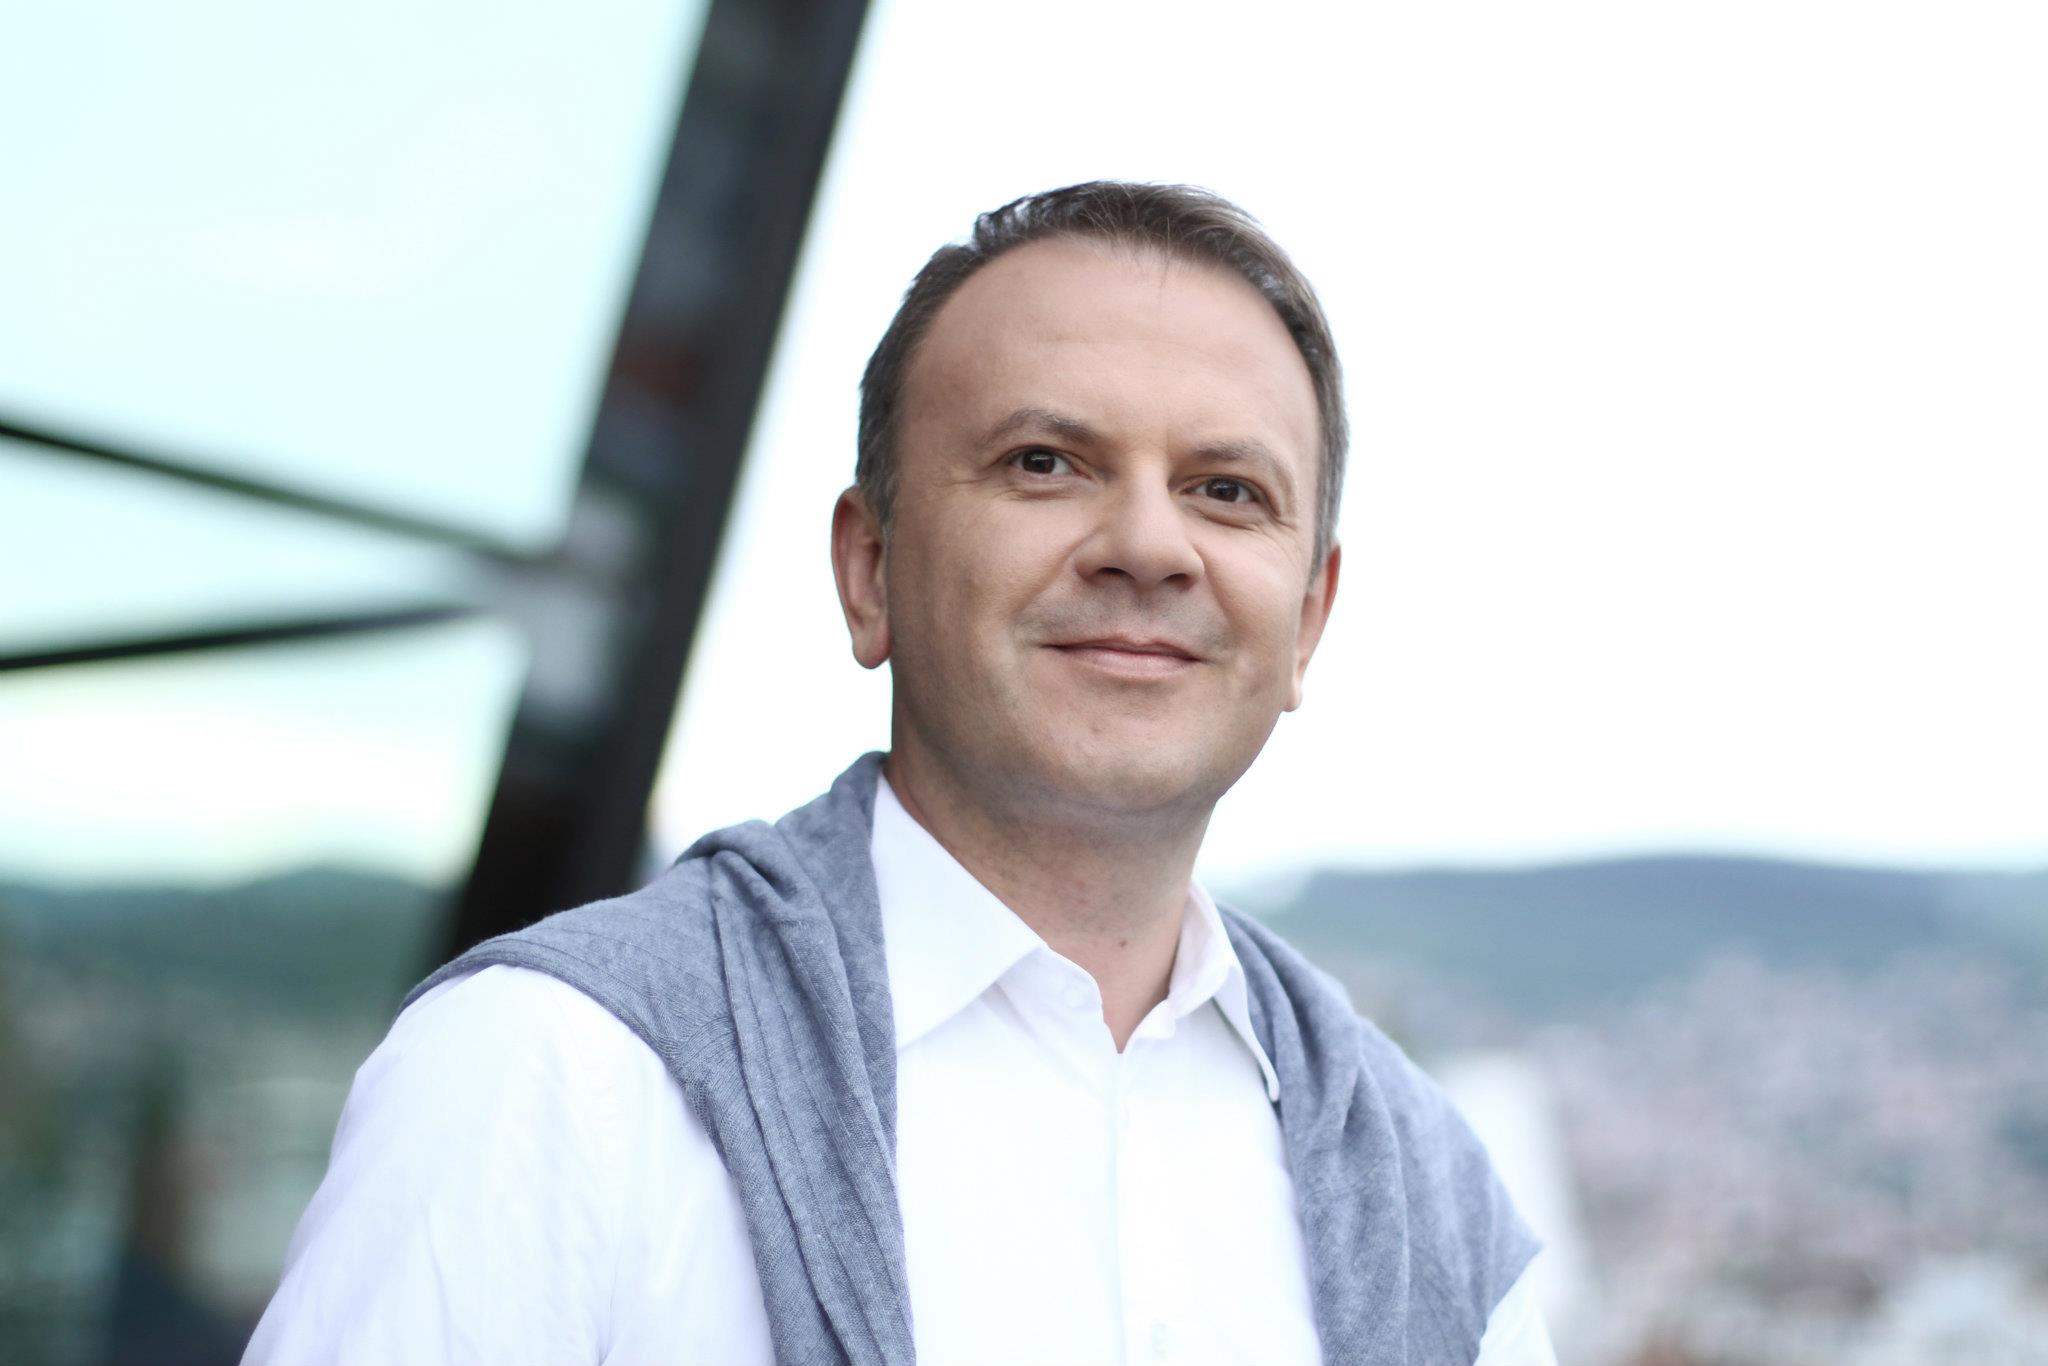  Adnan Rondić, Journalist at Al Jazeera Balkans: The Voice of the Disenfranchised